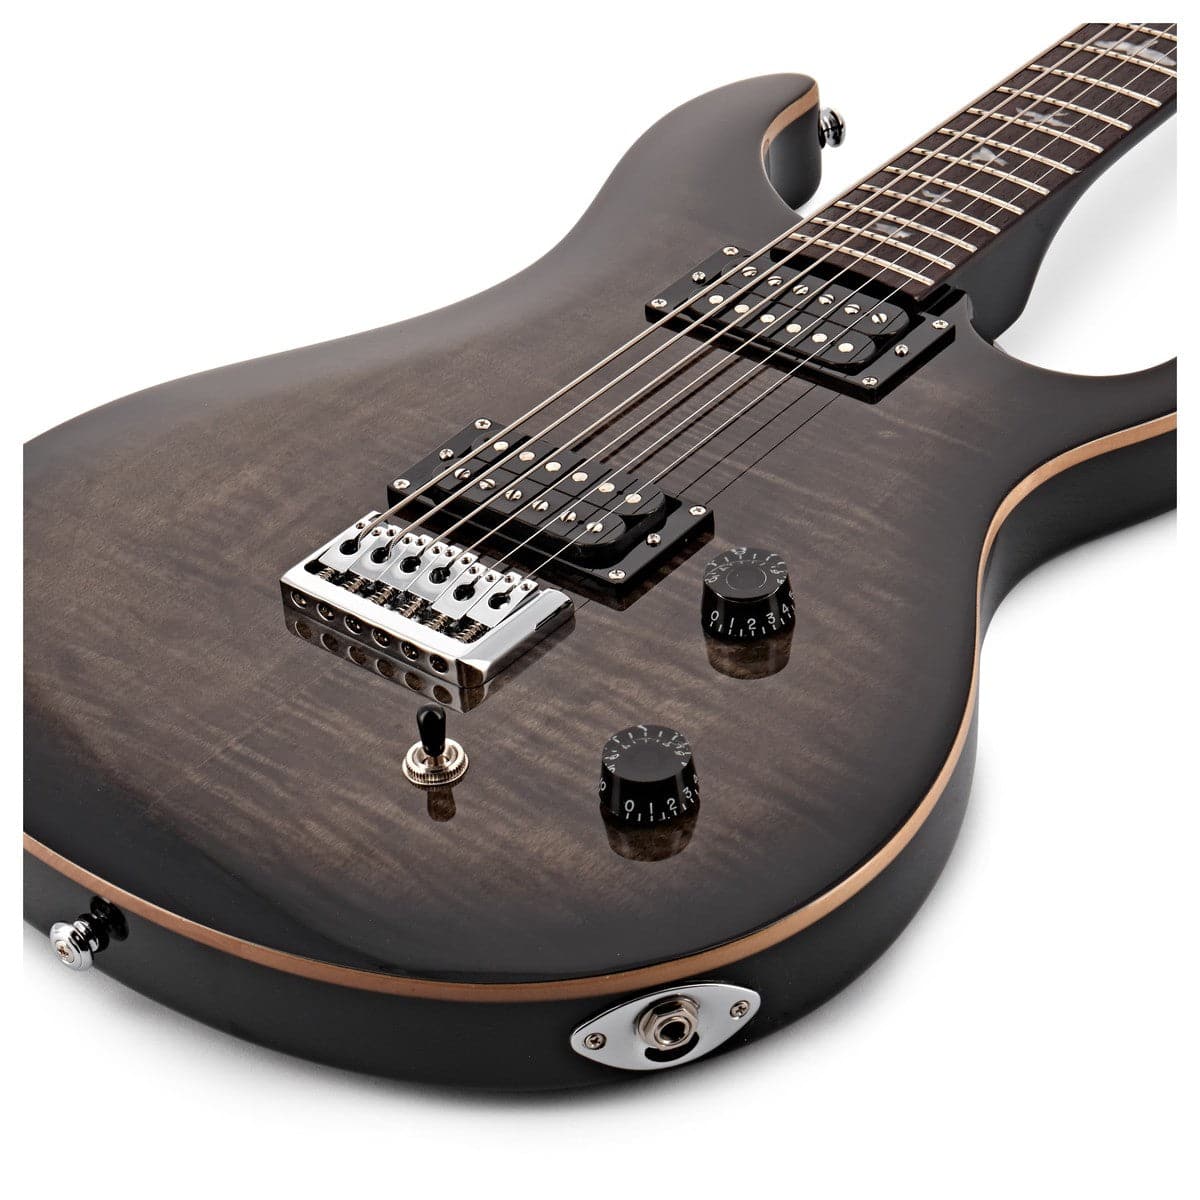 PRS SE 277 Baritone Electric Guitar - Charcoal Burst